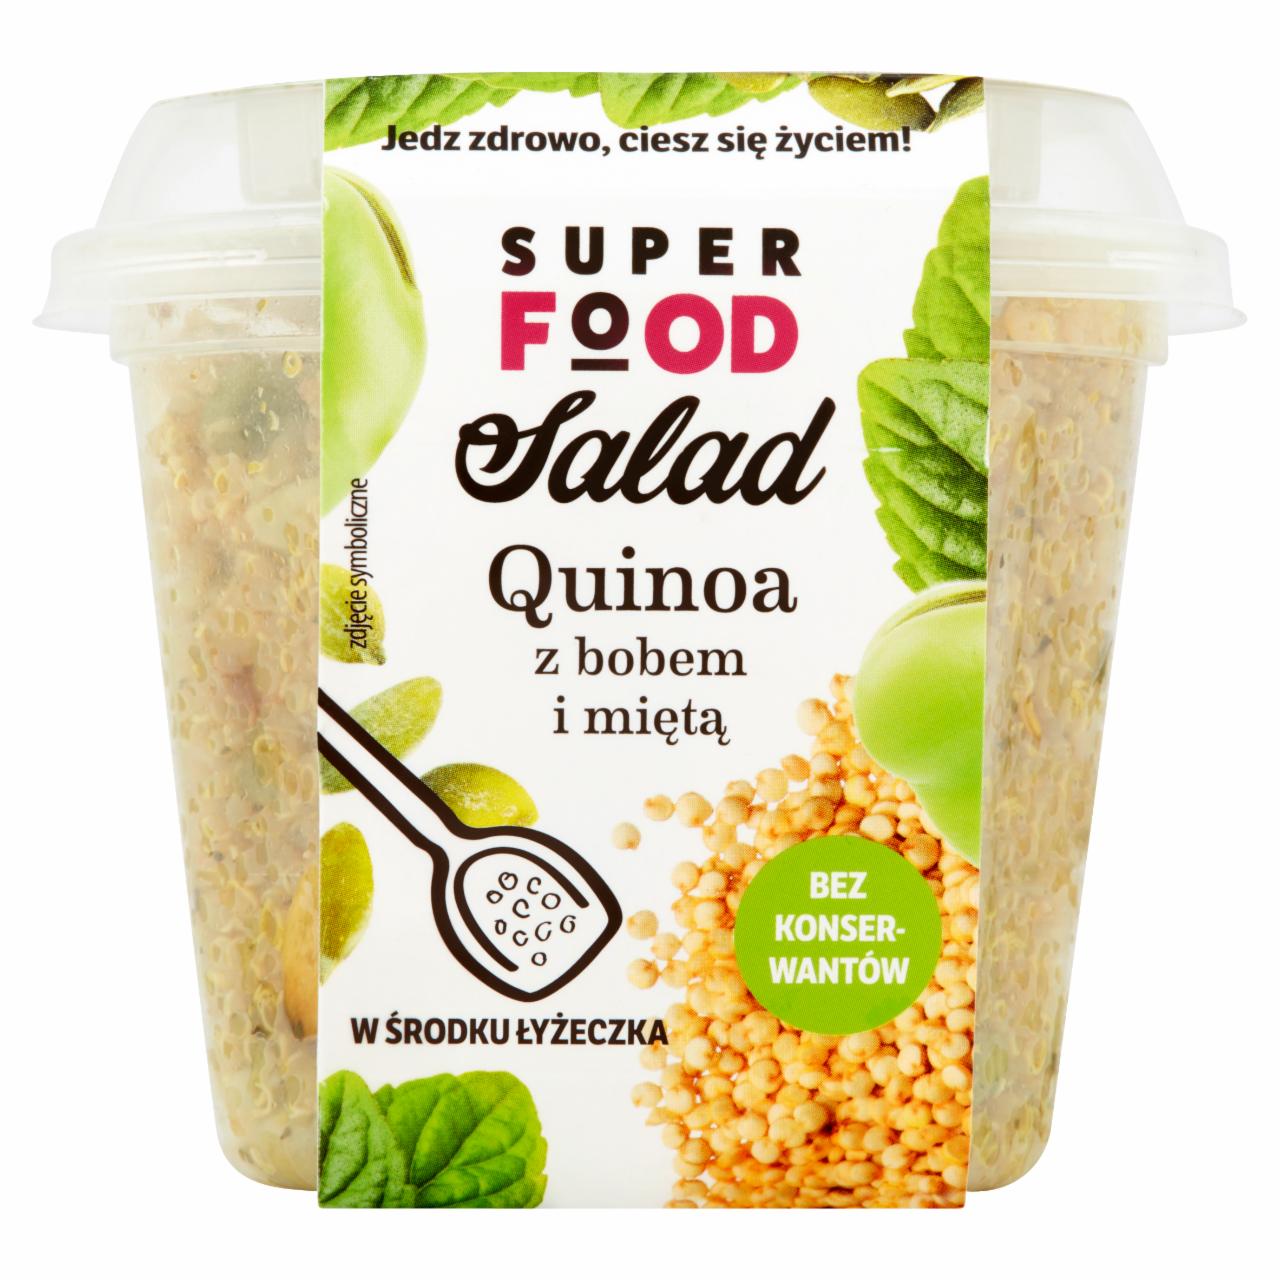 Zdjęcia - Super Food Salad Quinoa z bobem i miętą 200 g